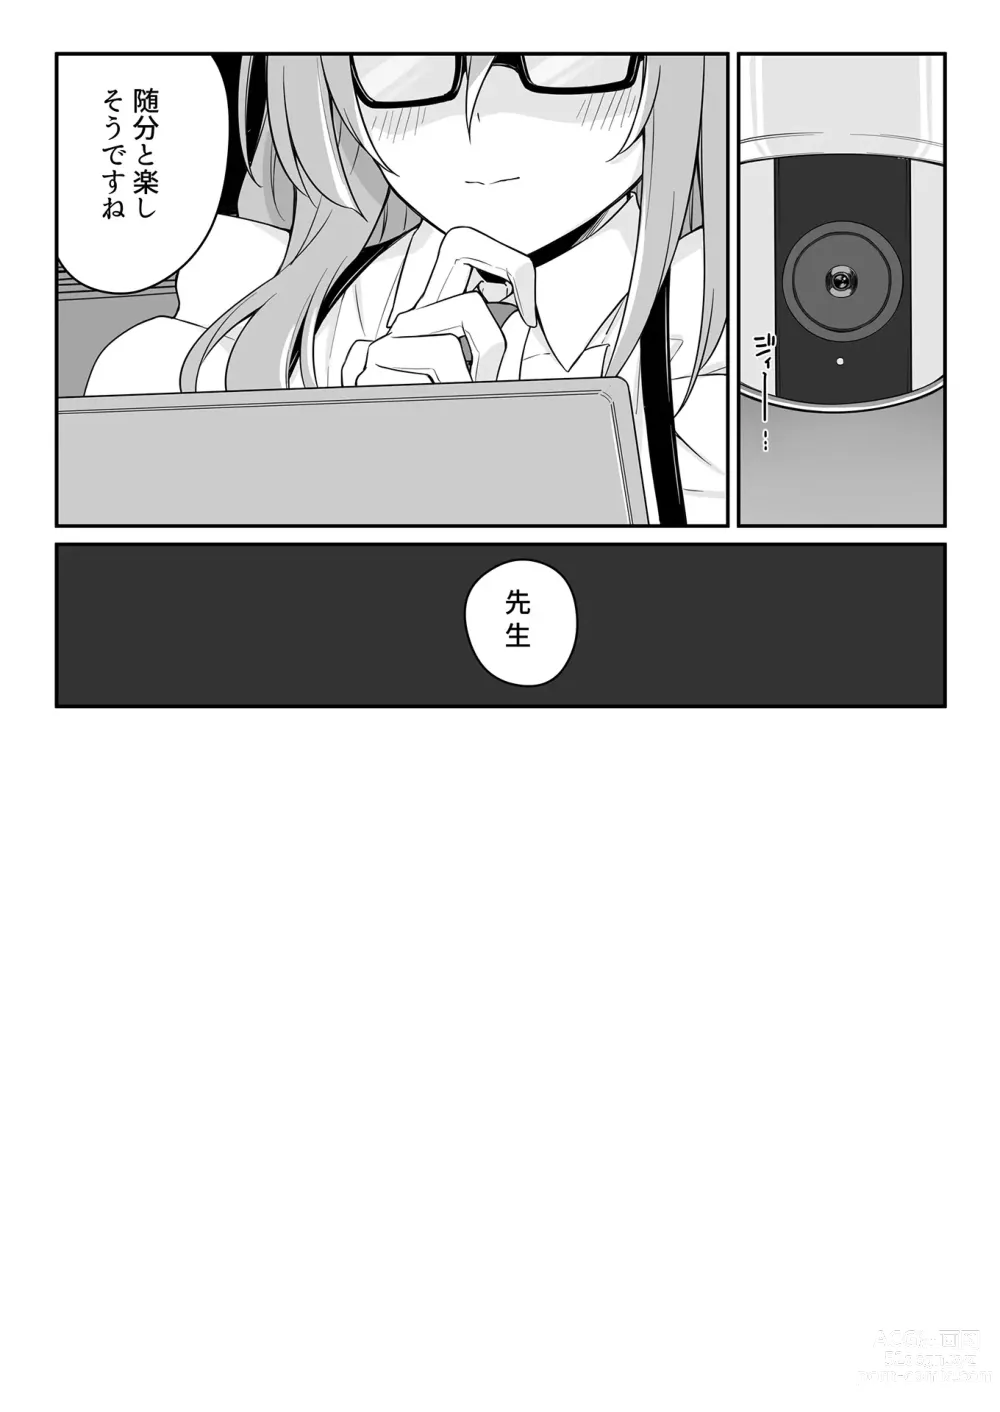 Page 21 of doujinshi Secret Party